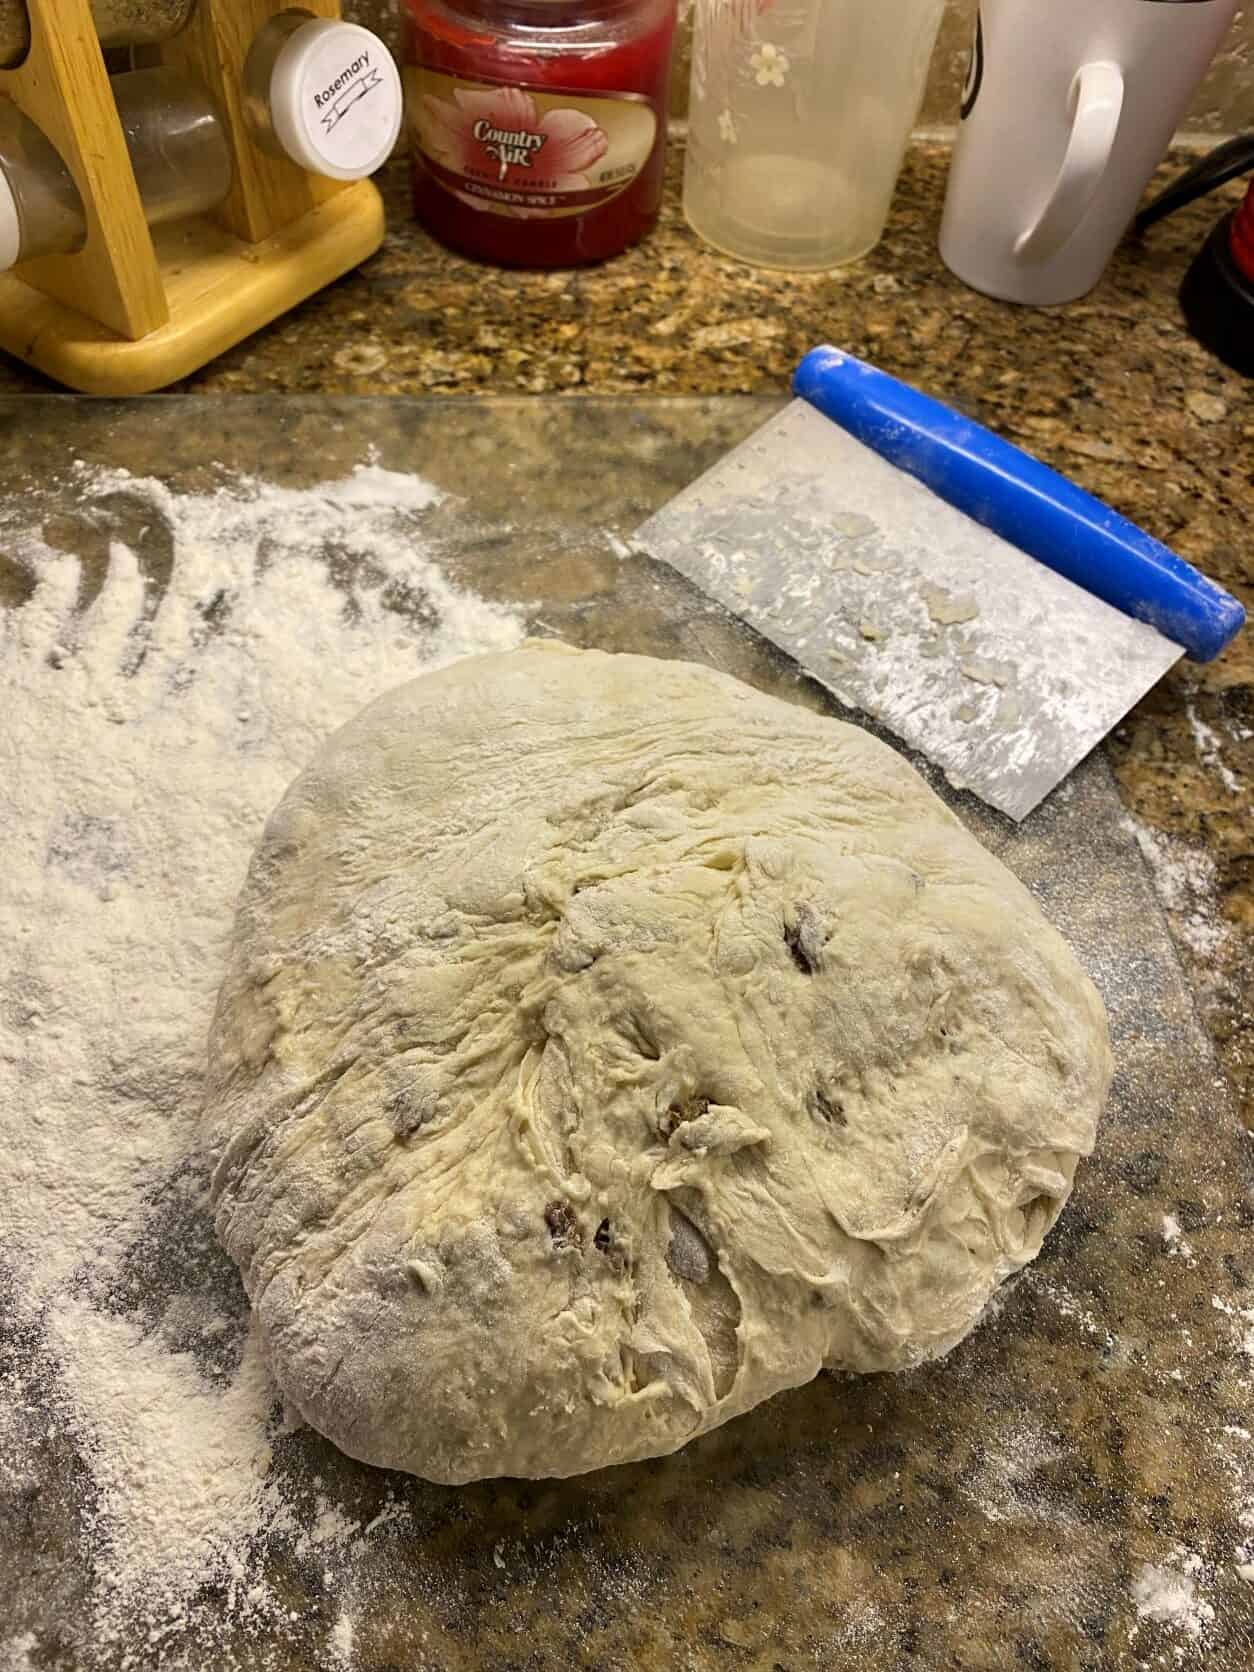 Raisin Banana bread dough on flour